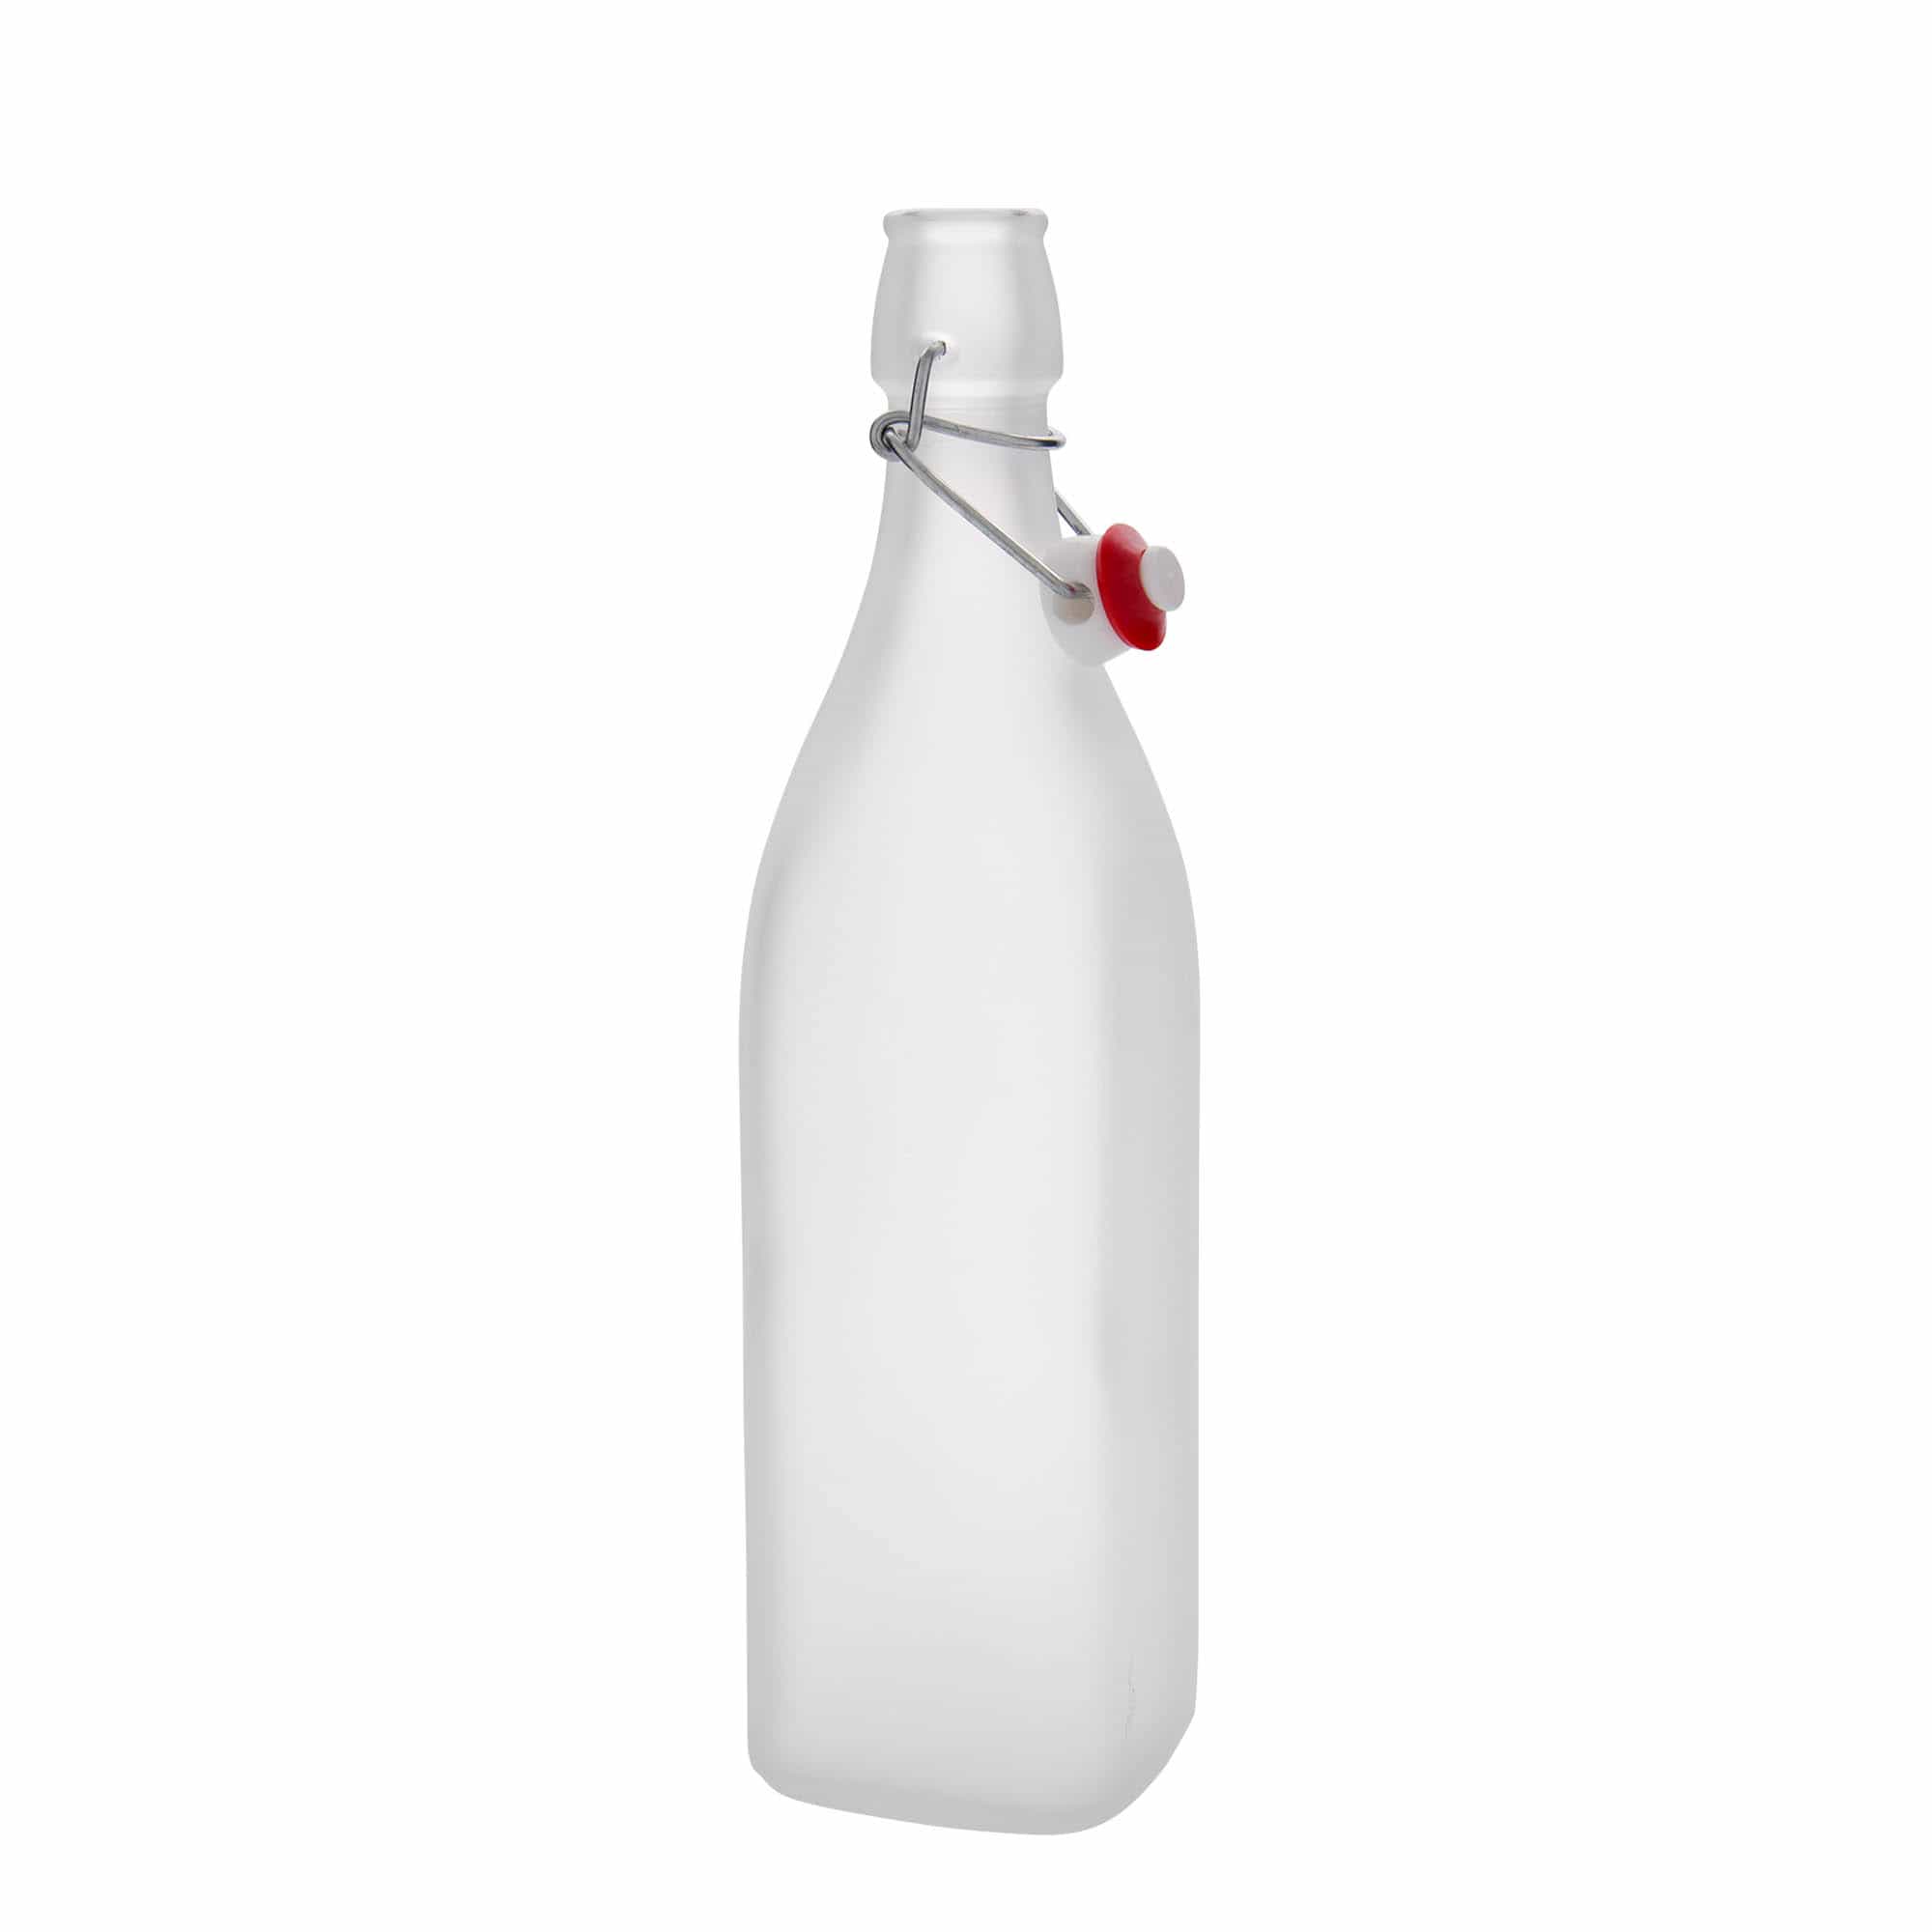 1,000 ml glass bottle 'Swing', square, white, closure: swing top